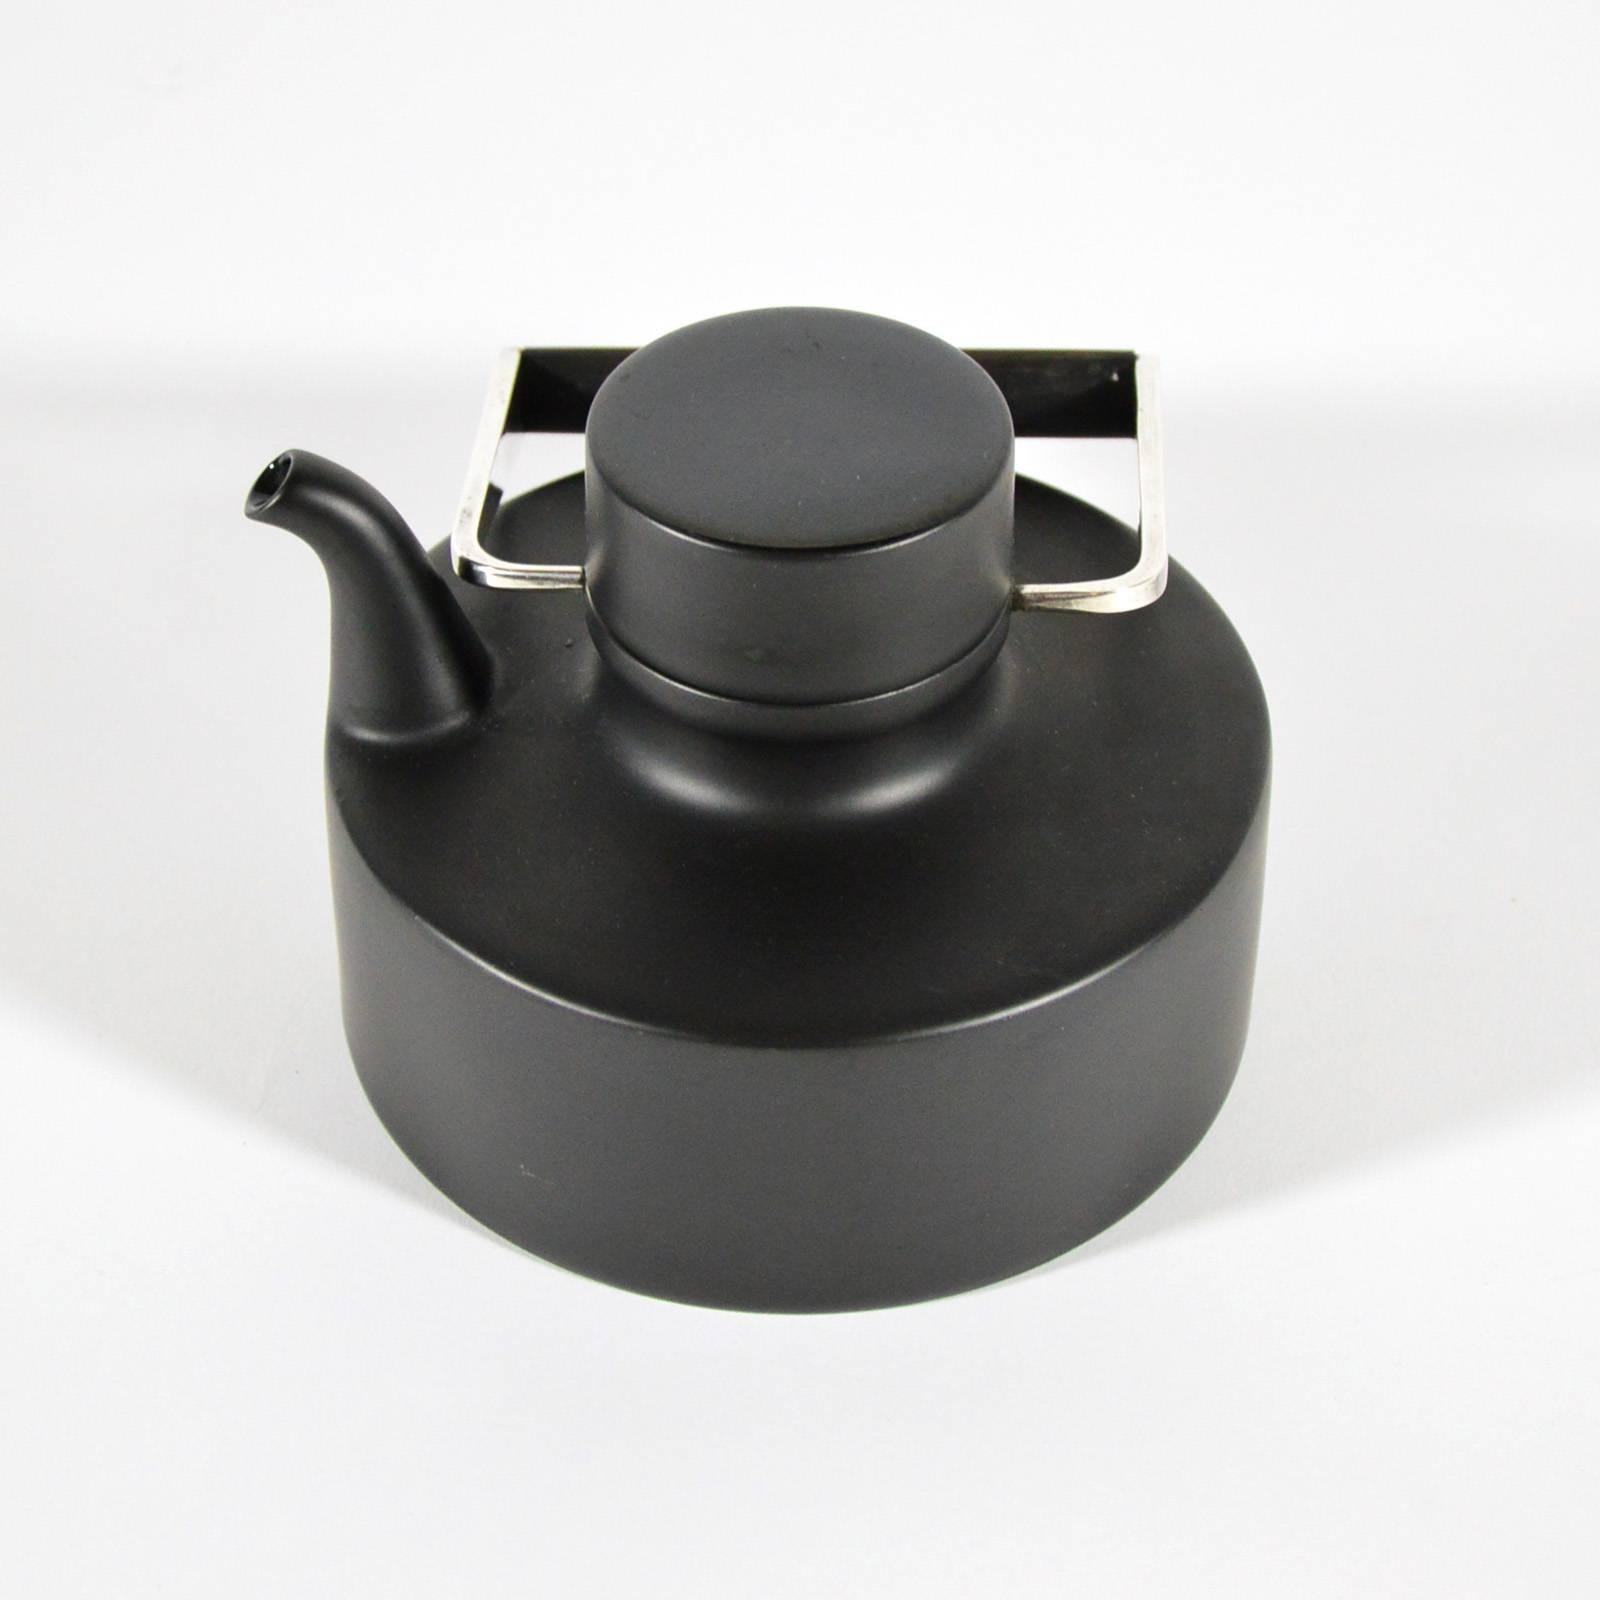 Scandinavian Modern Black Porcelain Teapot by Tapio Wirkkala for Rosenthal Studio Linie, 1963